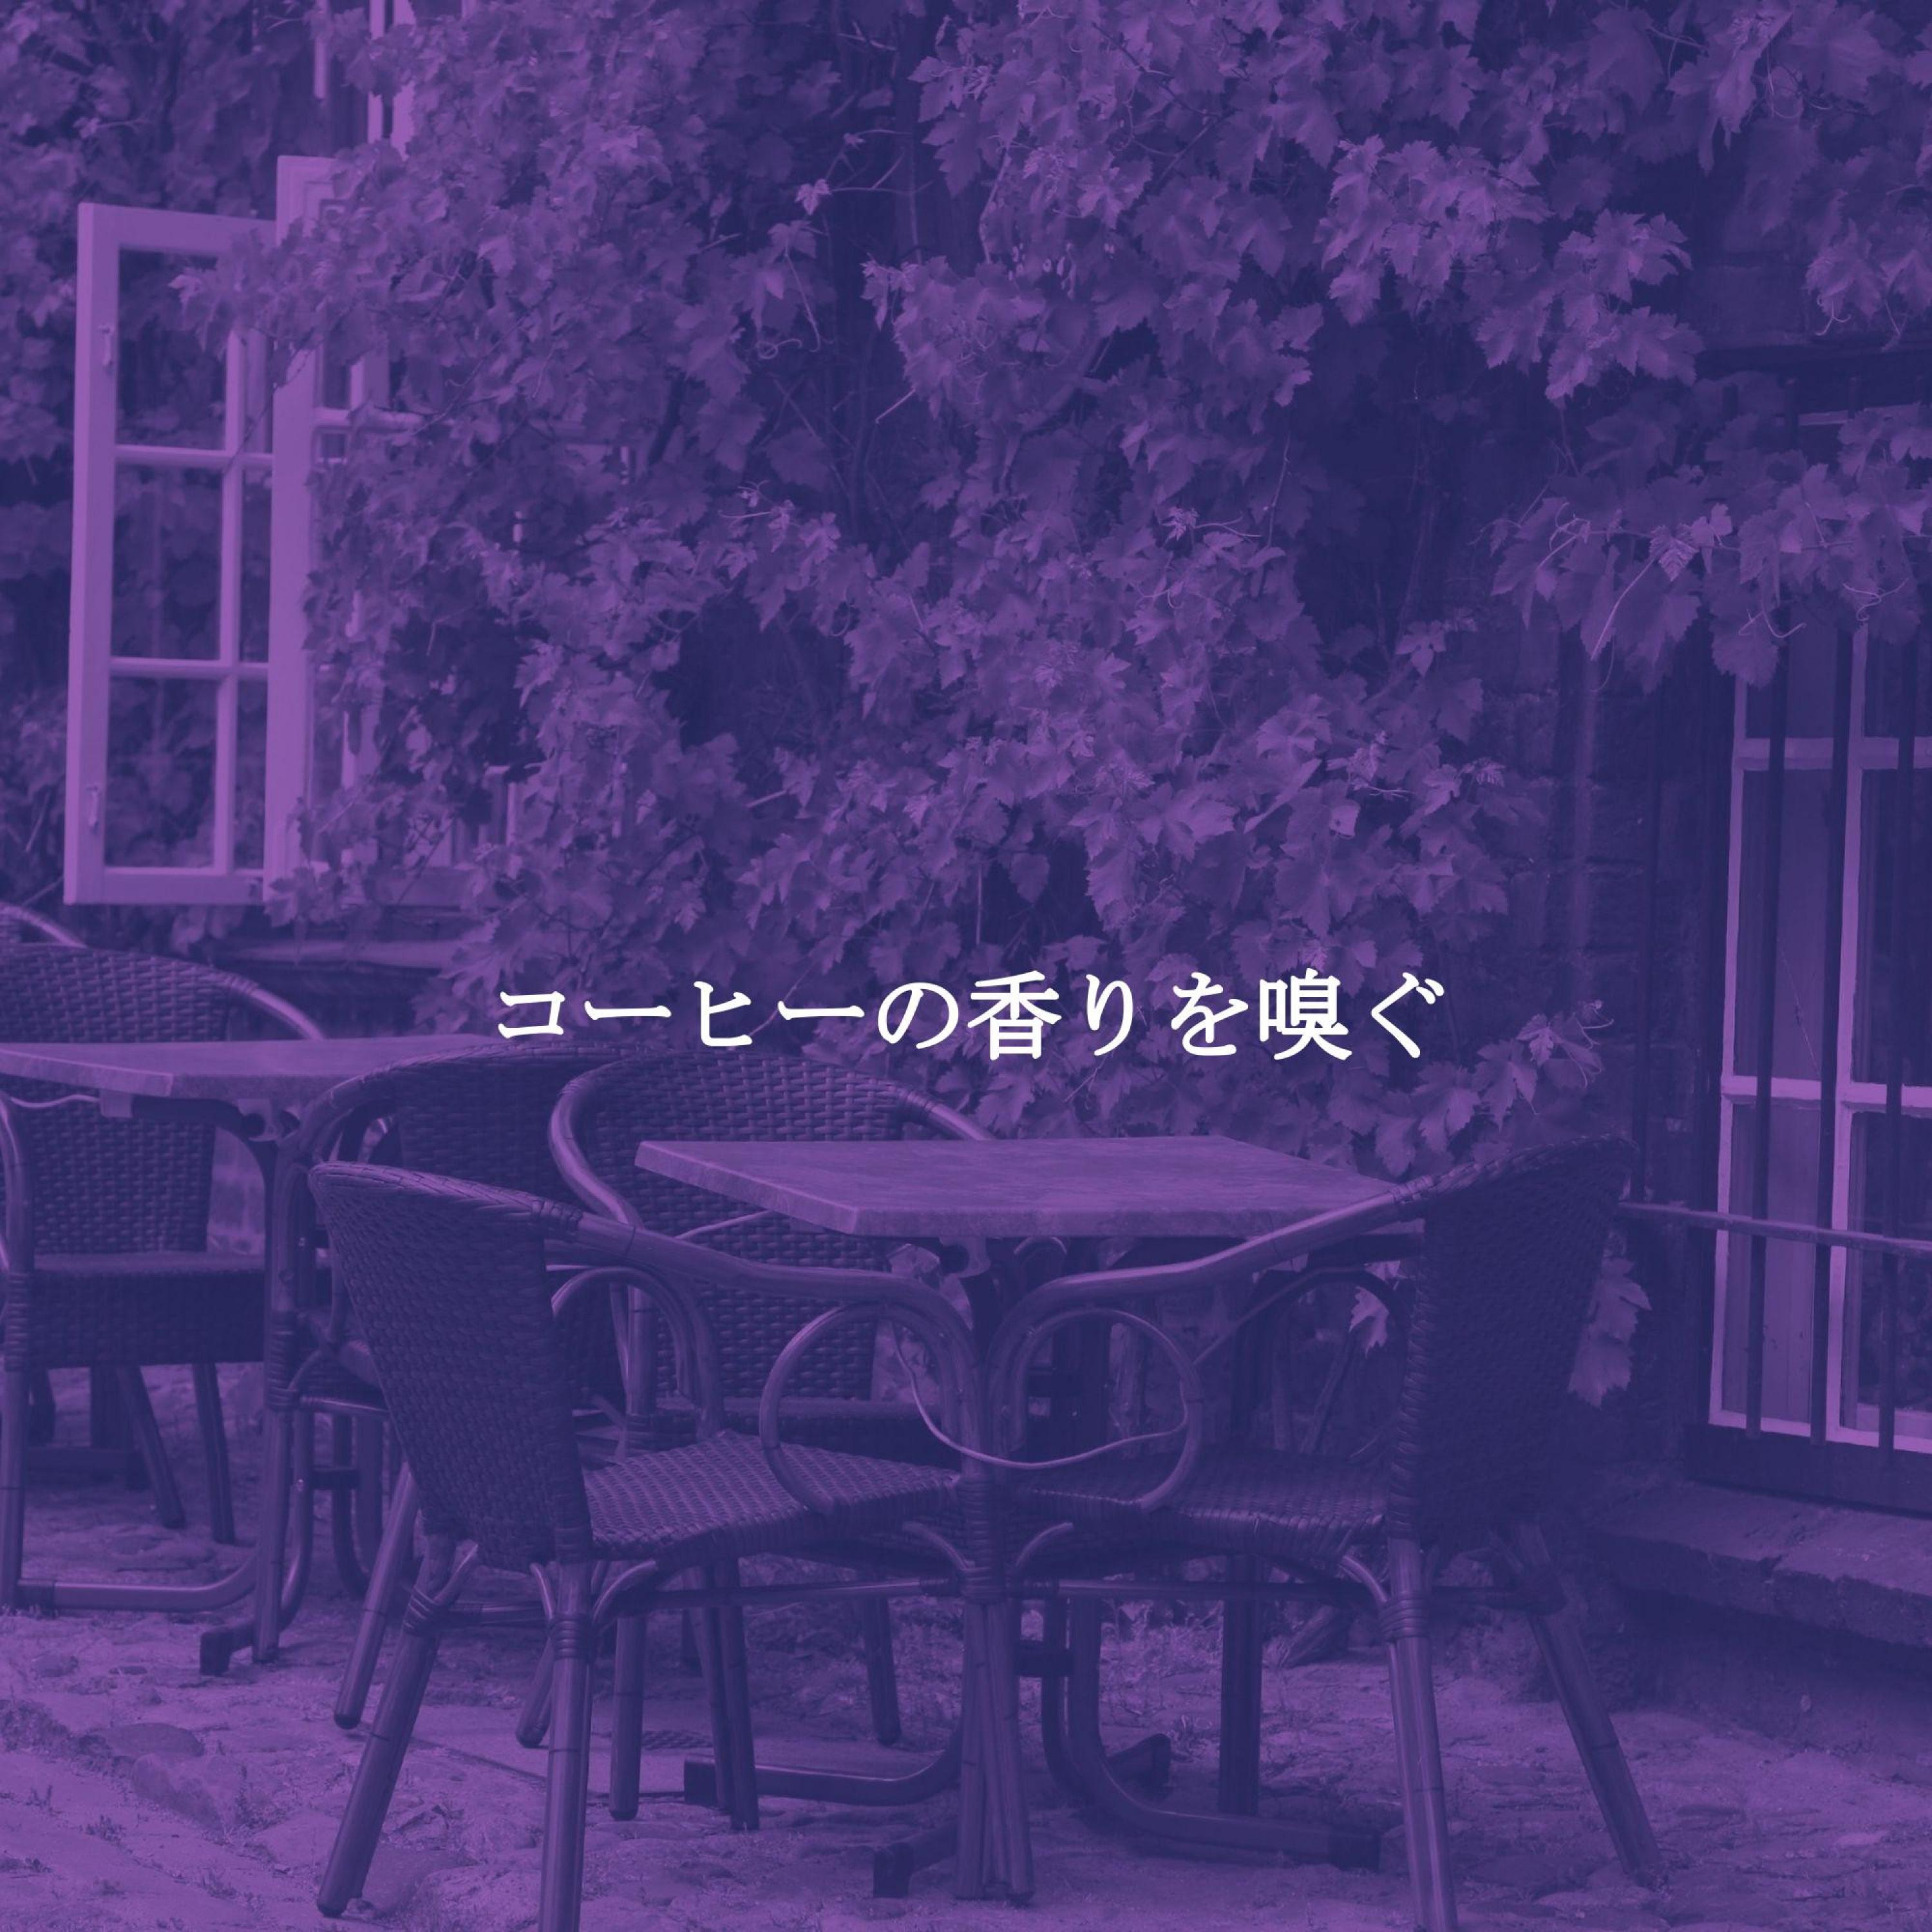 Moderno Cafe Jazz - Background for Autumn Feelings